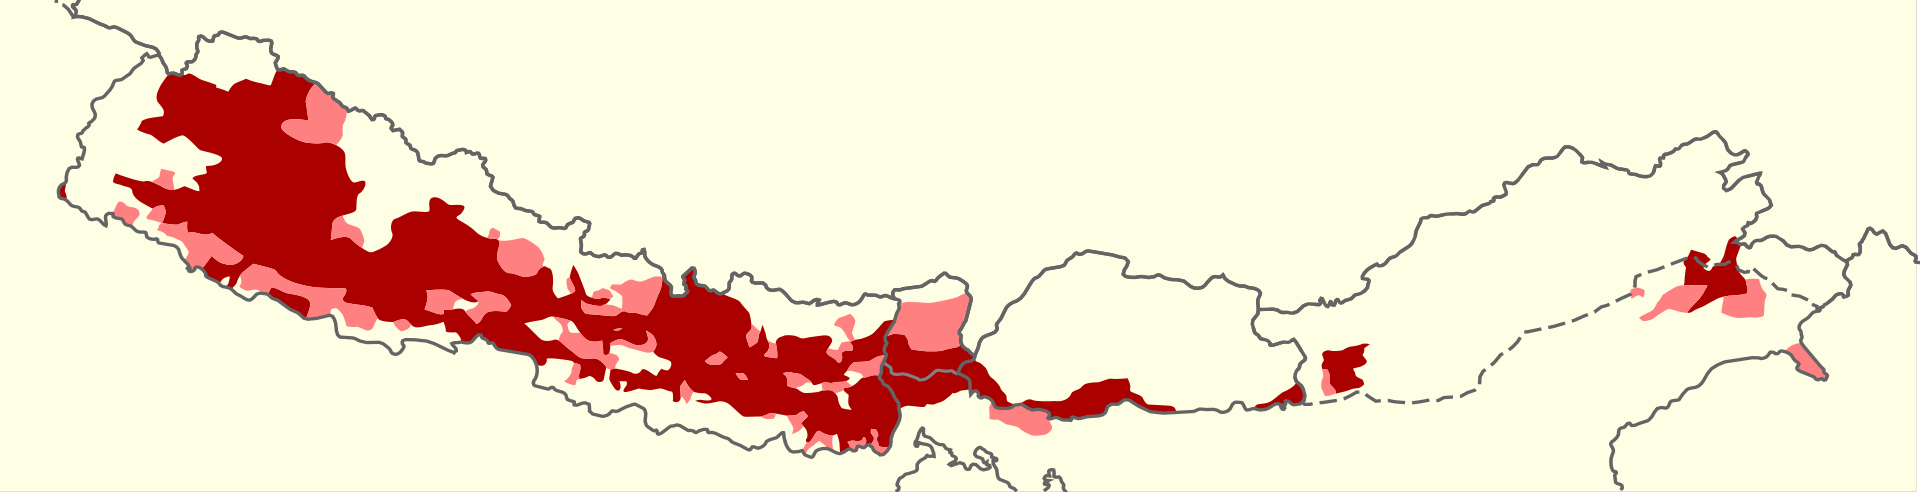 Nepali speaking countries and territories